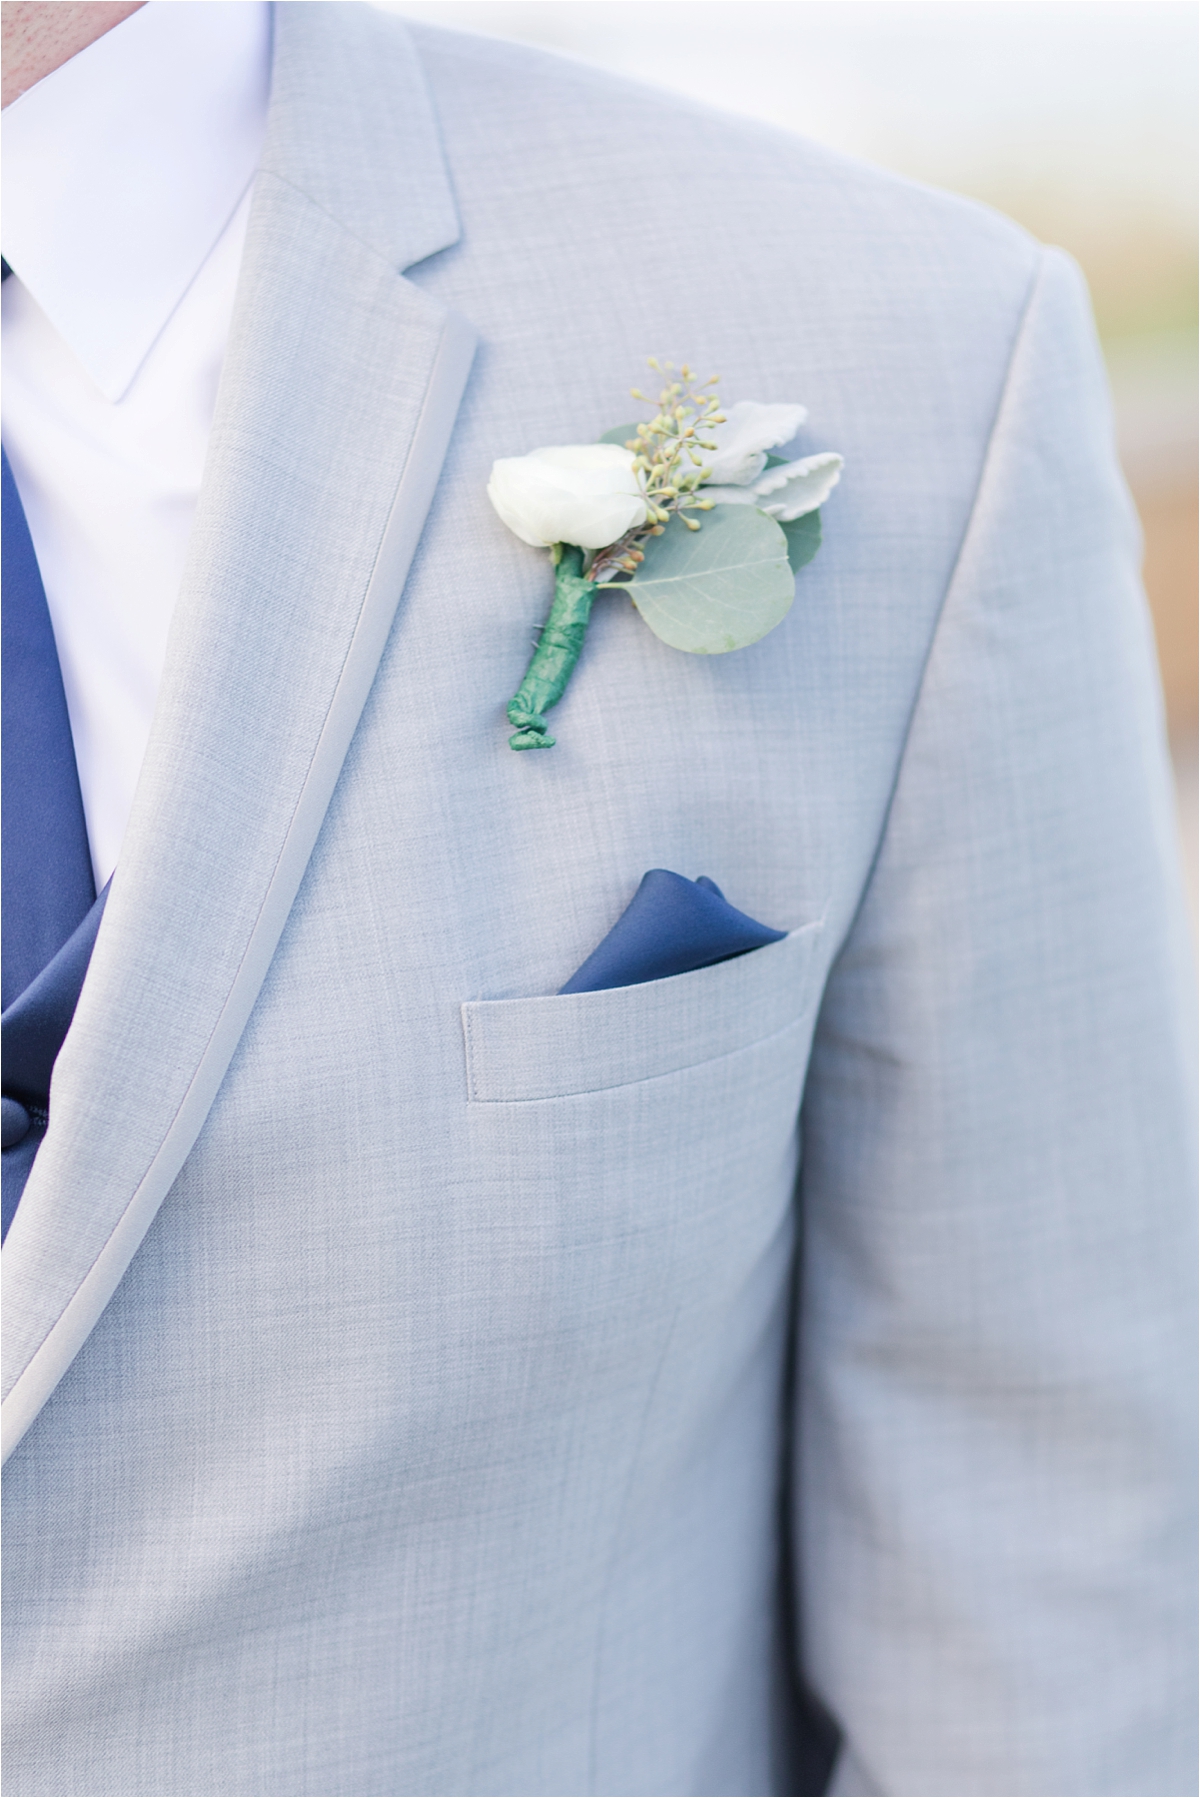 dainty-corsage-navy-pocket-hankerchief-wedding-groom-light-blue-suit-baby's-babys-breath